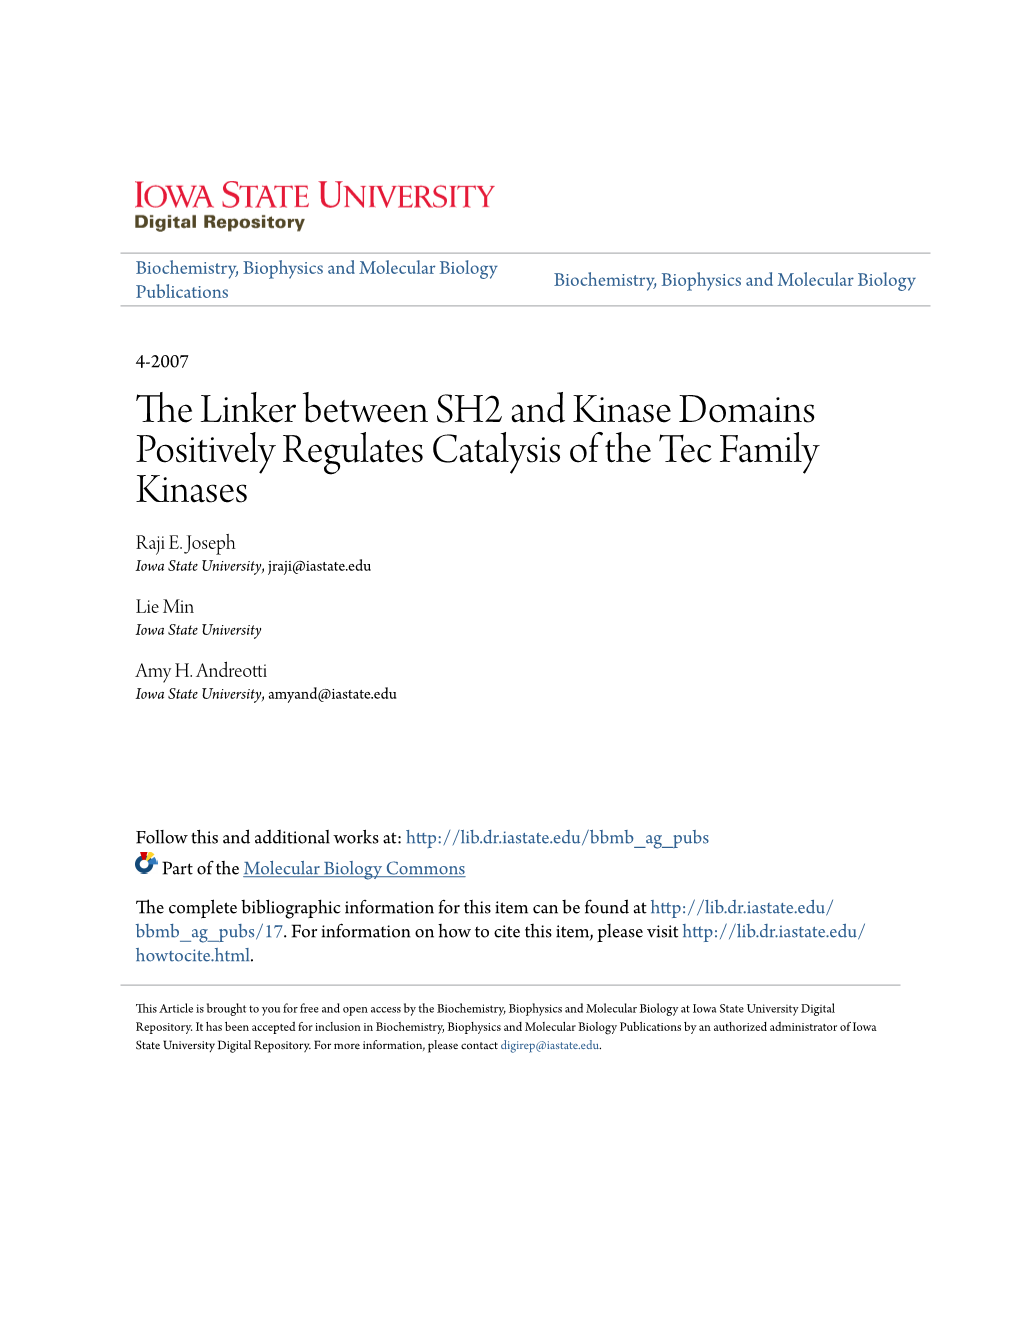 The Linker Between SH2 and Kinase Domains Positively Regulates Catalysis of the Tec Family Kinases Raji E